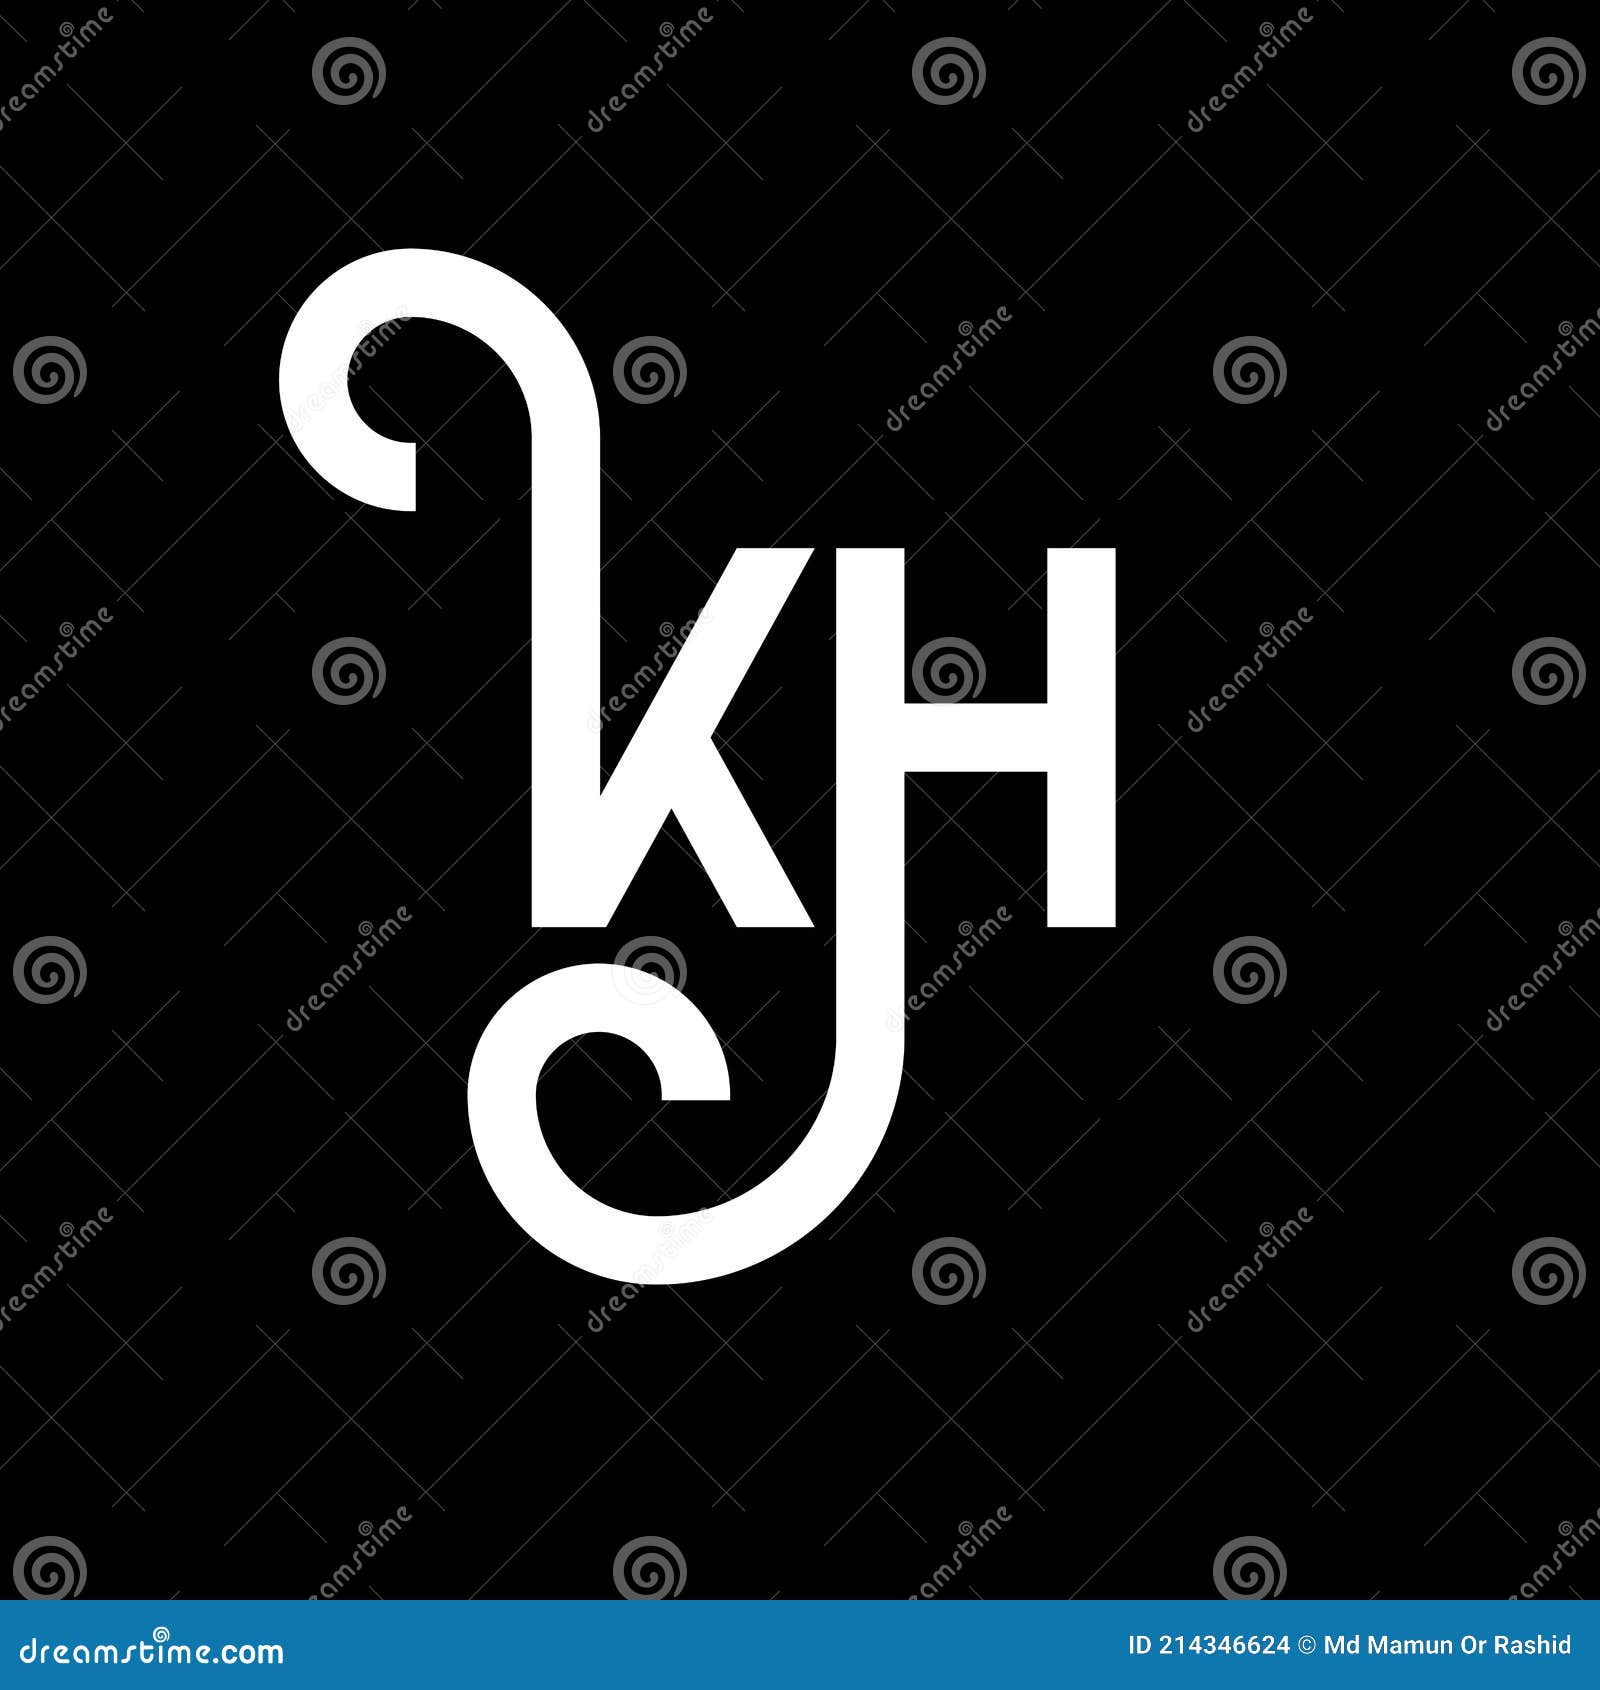 KH Letter Logo Design on Black Background. KH Creative Initials Letter ...